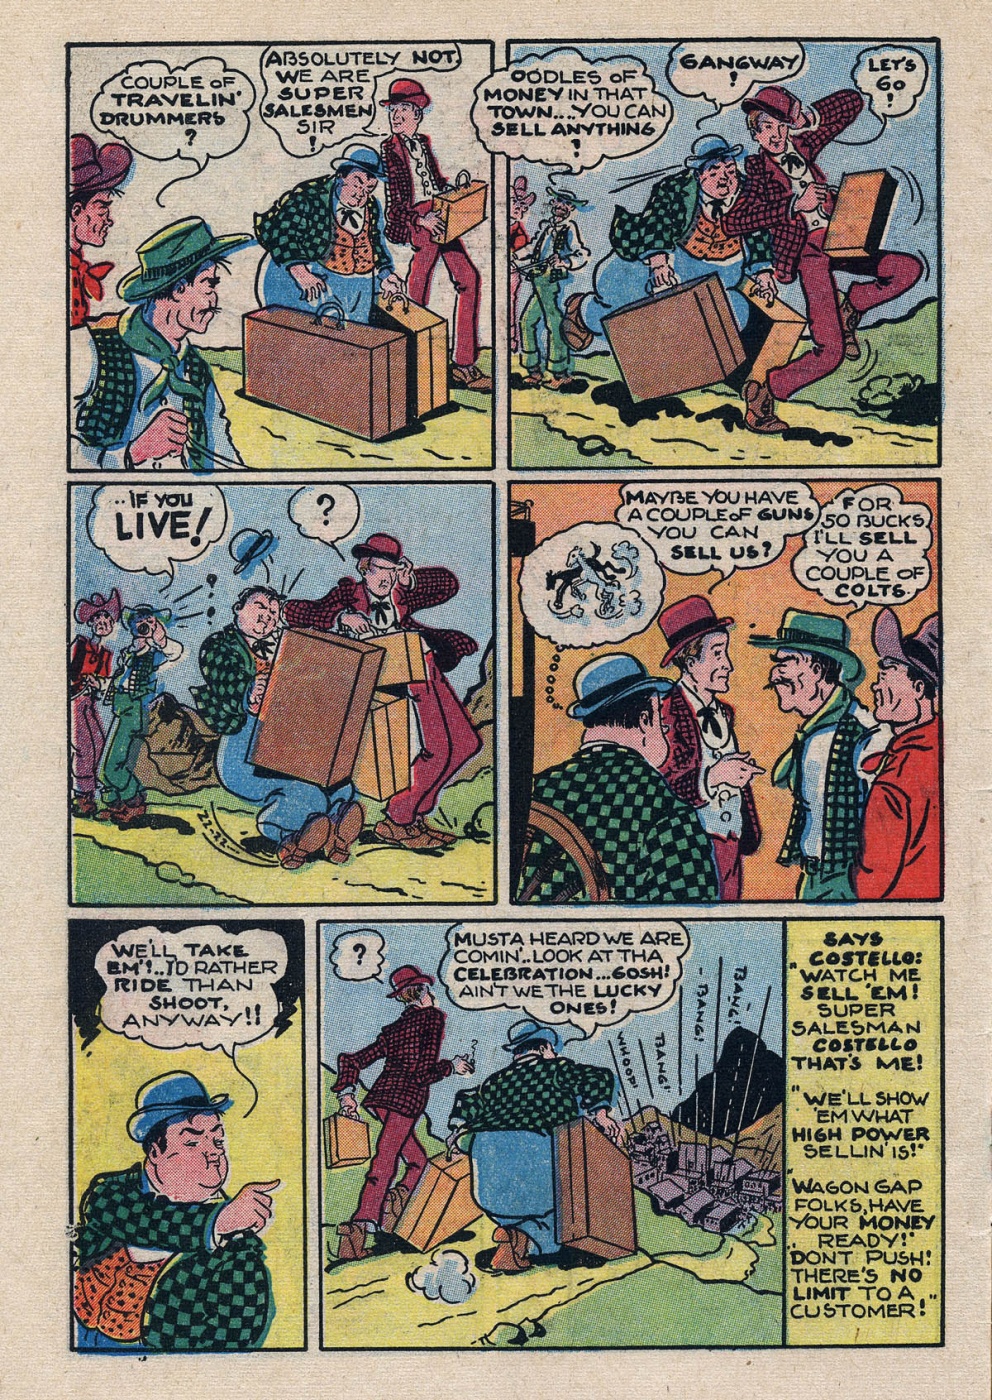 Funny Comic Strips - Abbott and Costello 001 (Feb 1948) 4